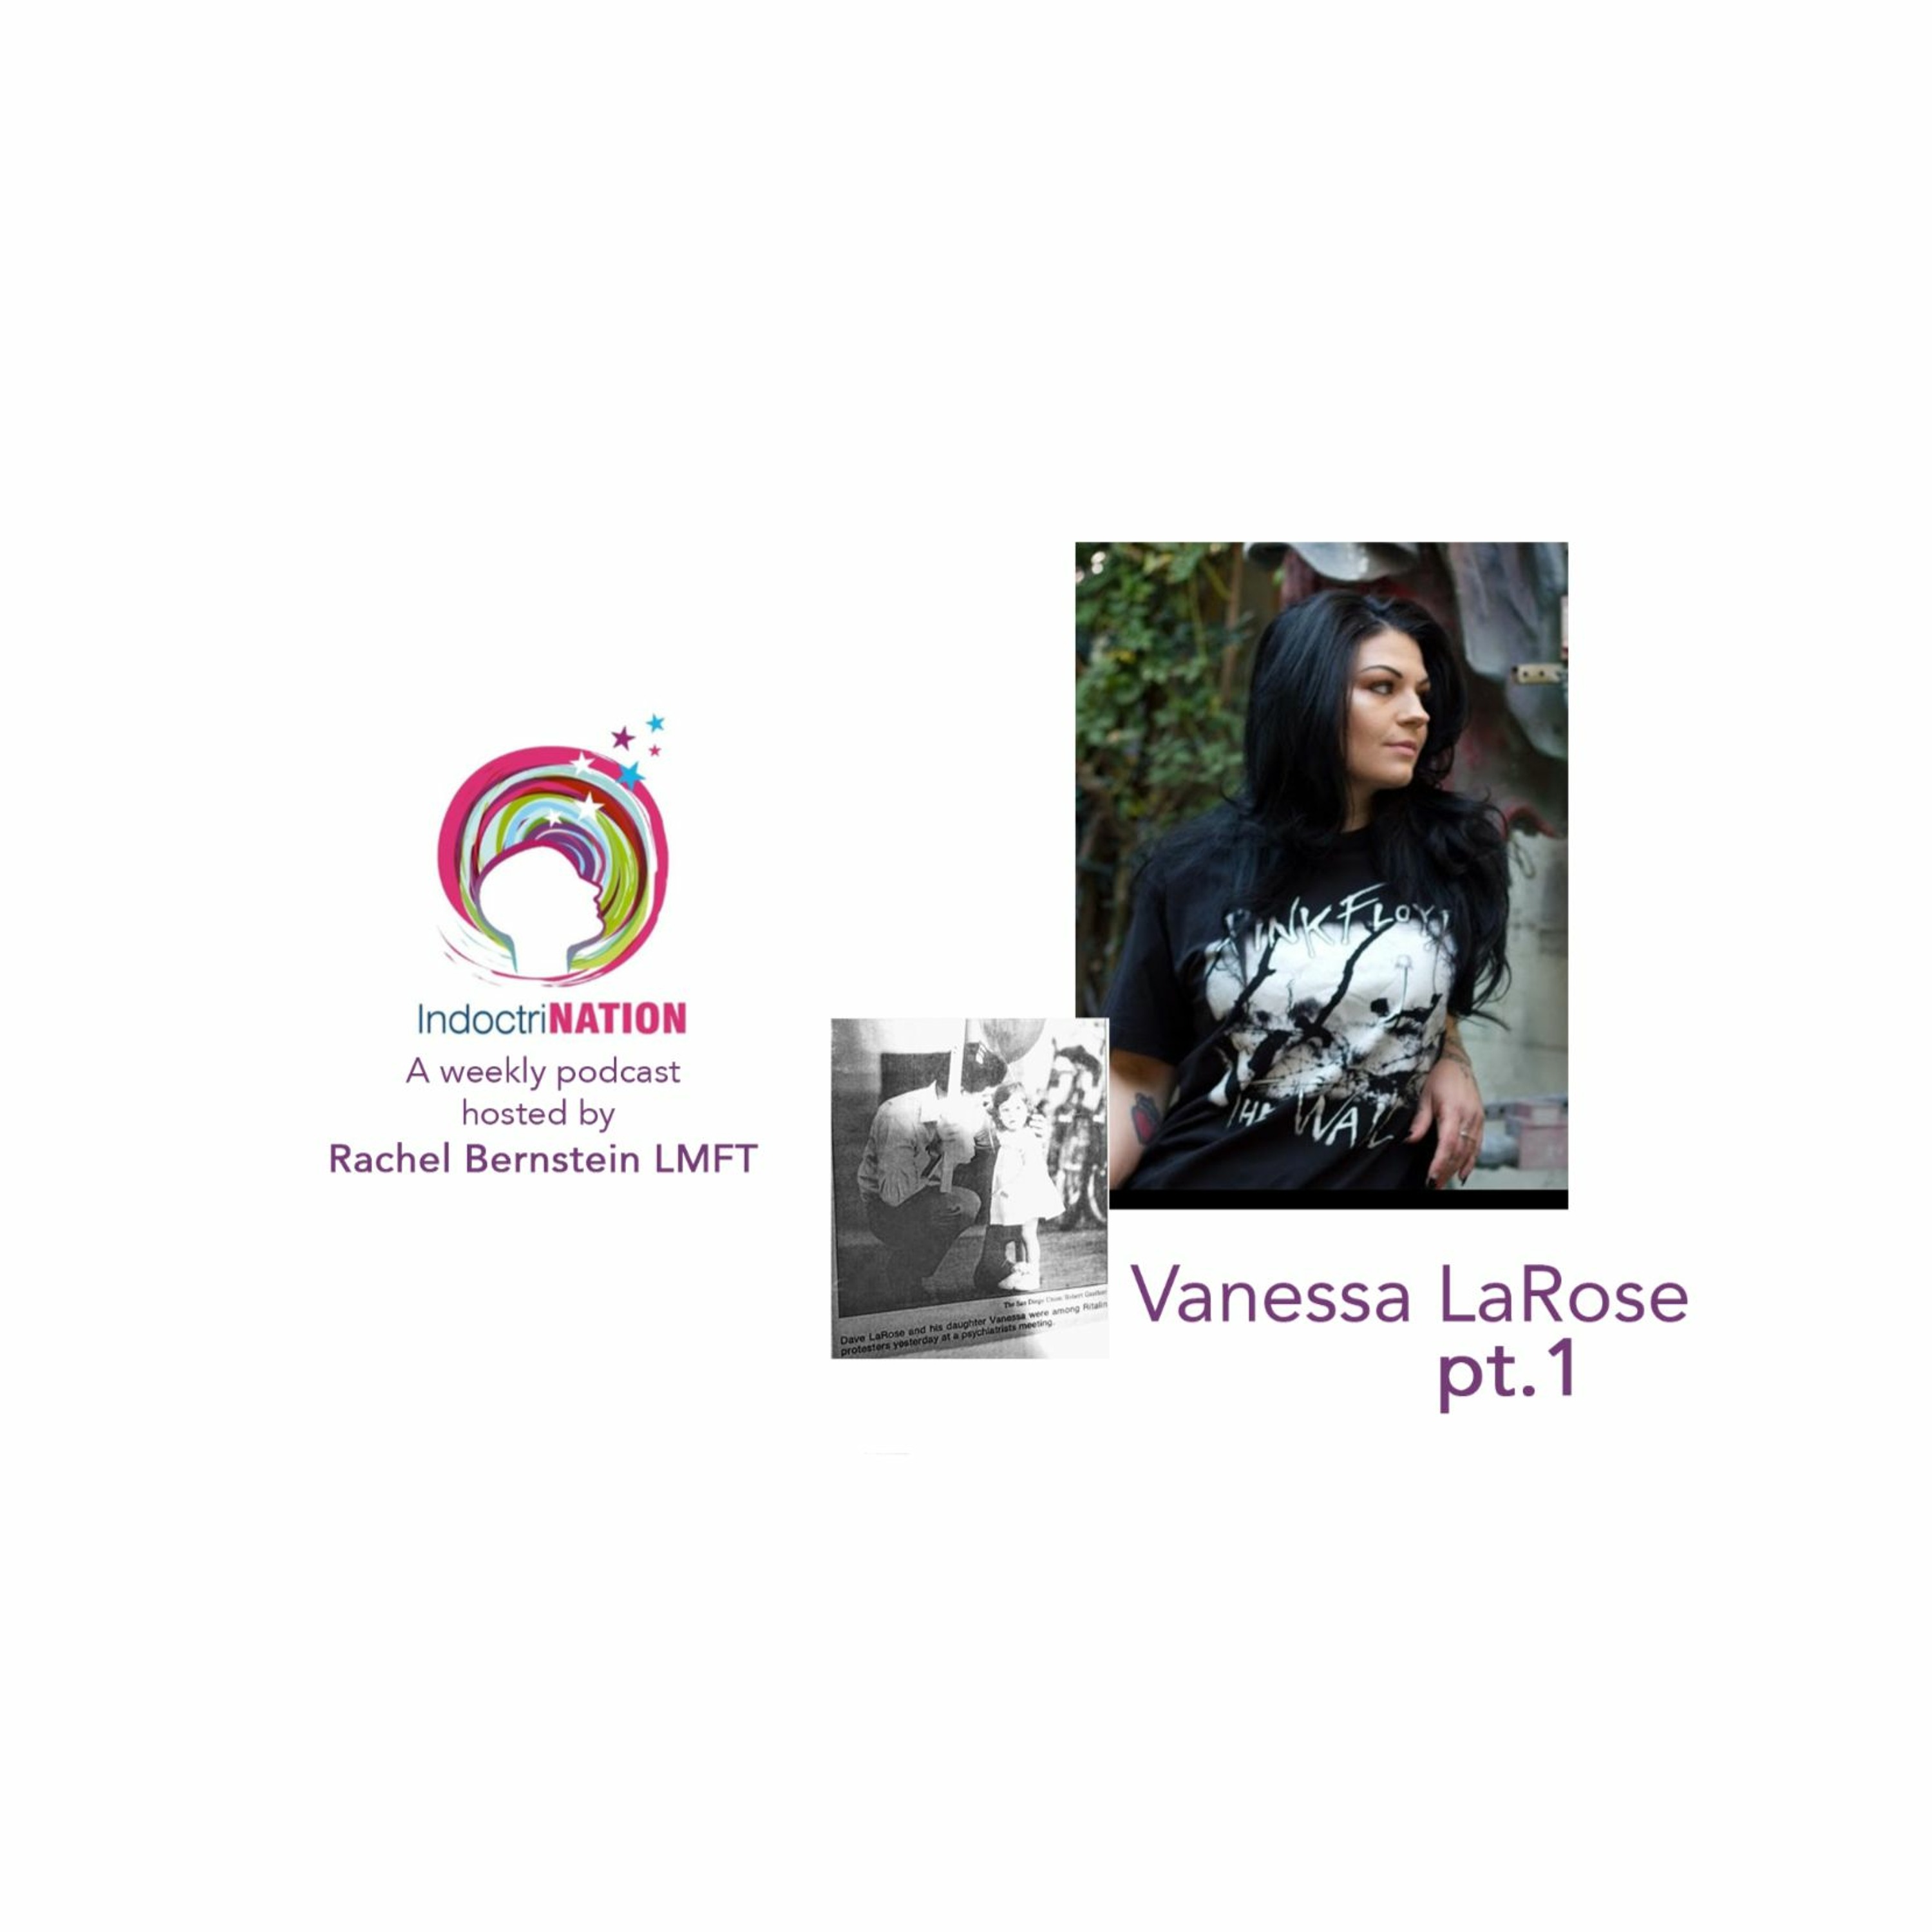 Join Vanessa LaRose as she exits Scientology - S4E11pt1 Image